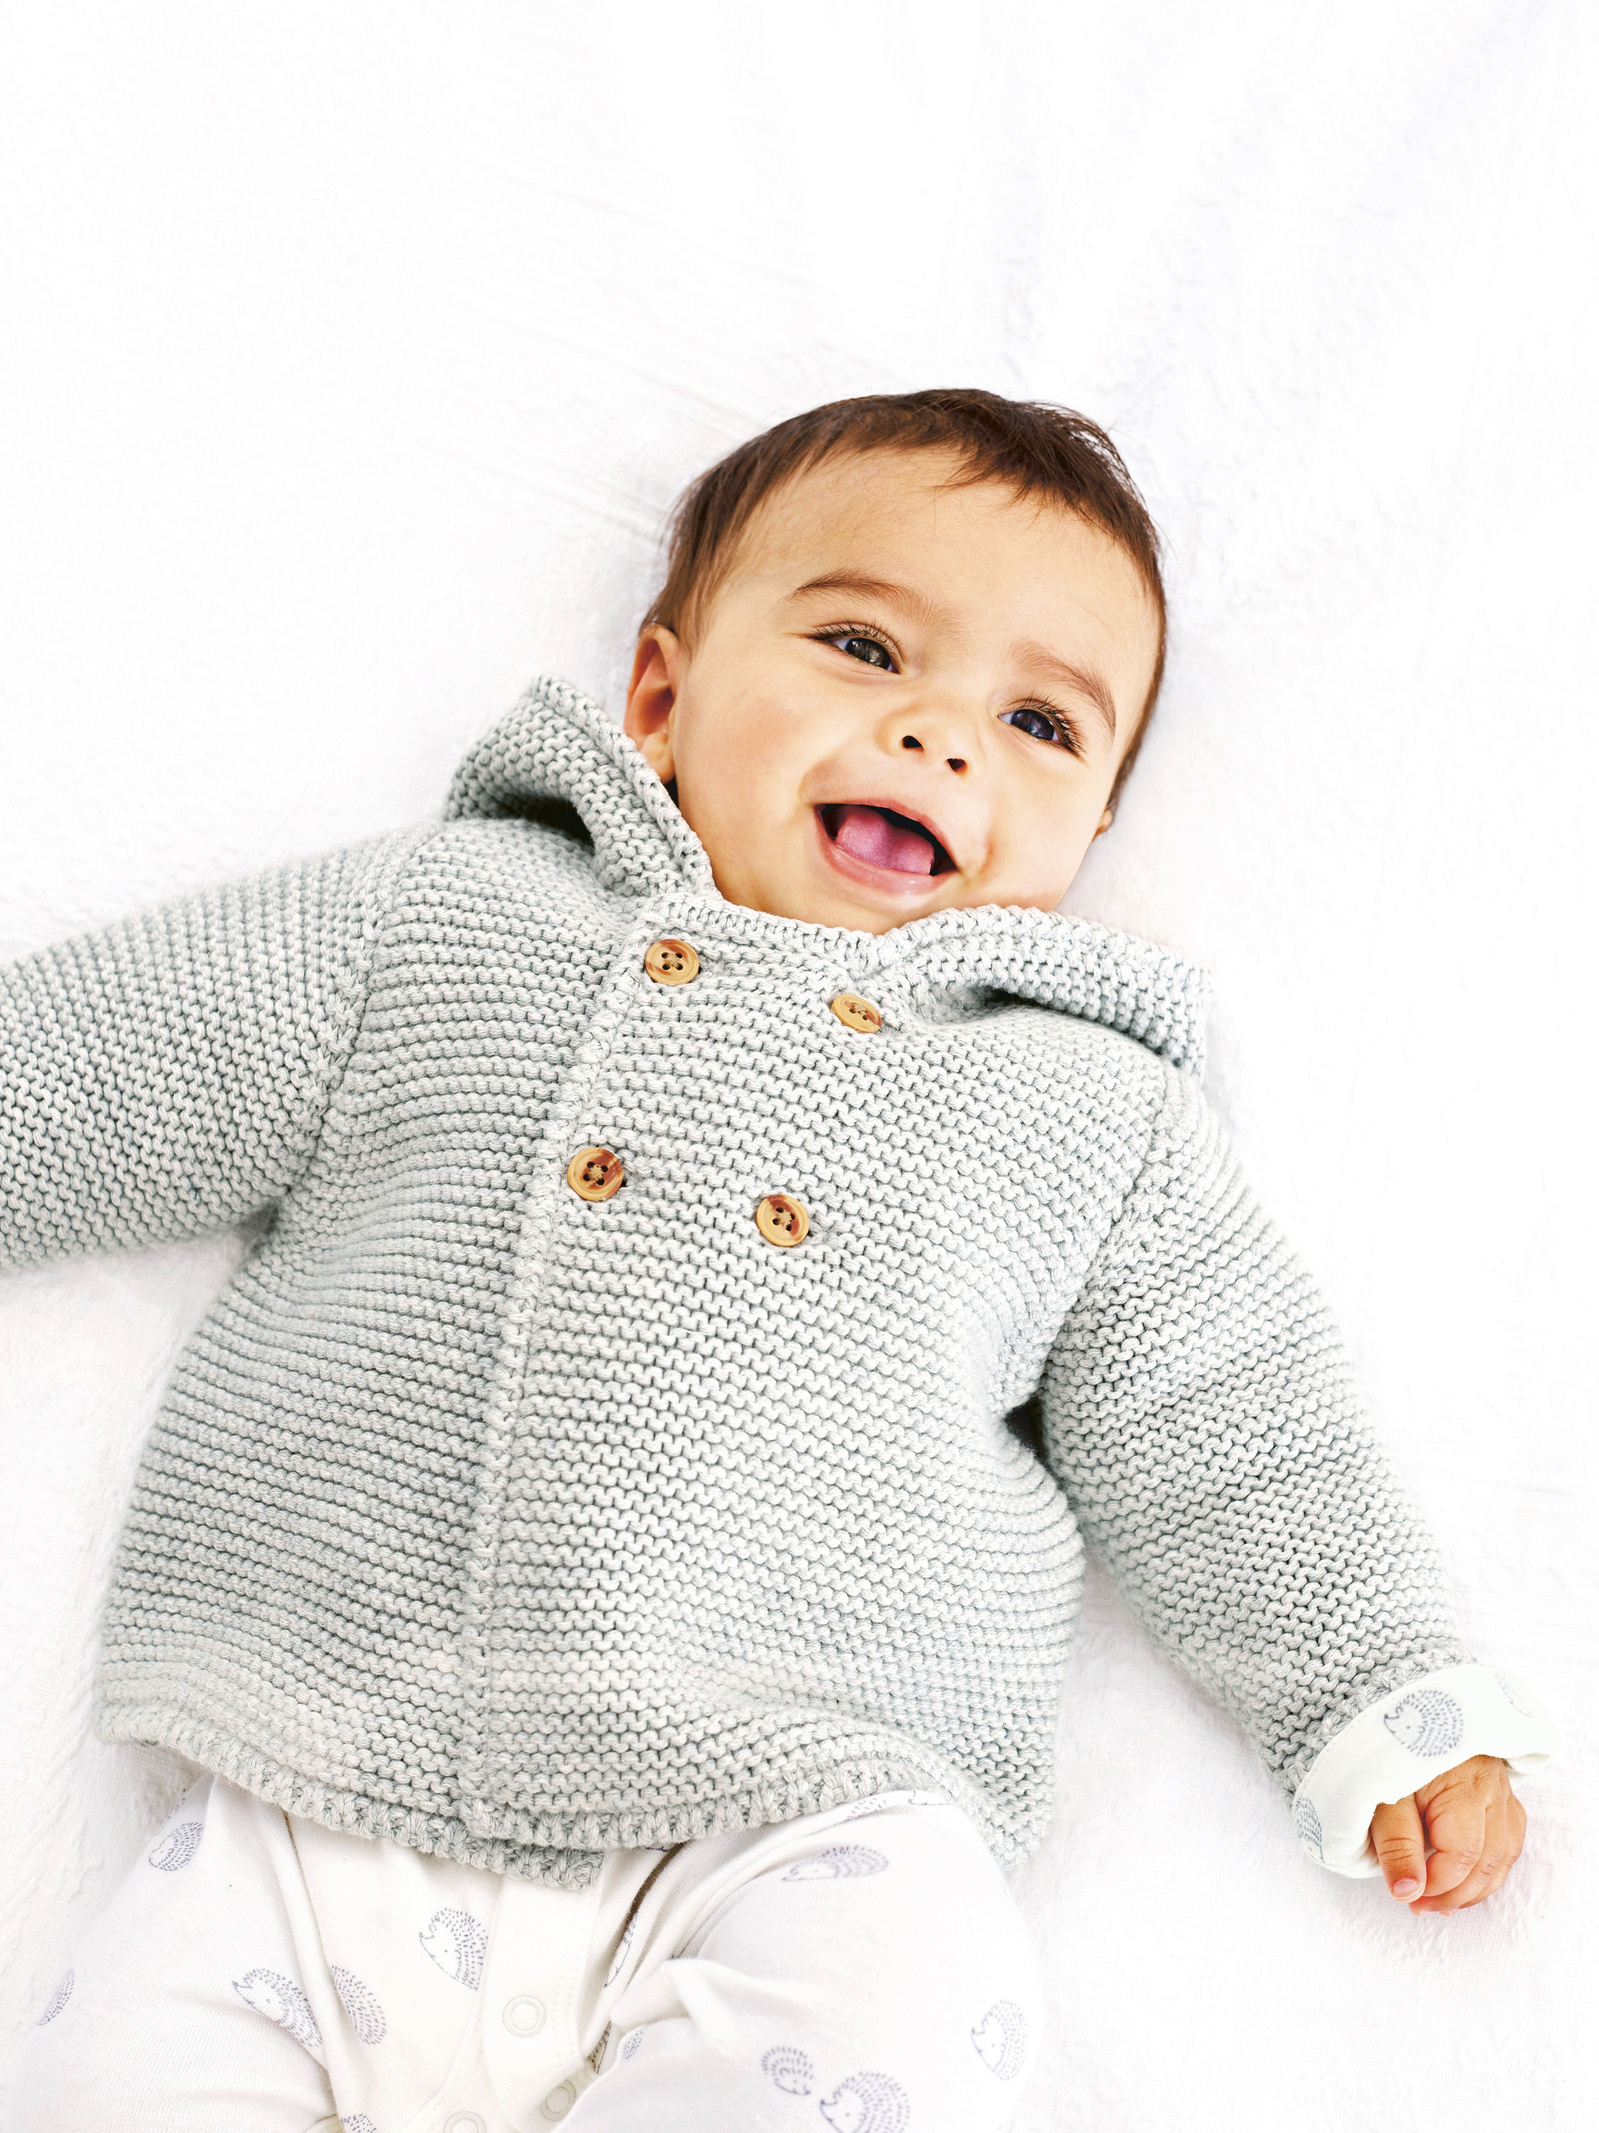 Baby fashion photography for M&S - David Handley's Portfolio